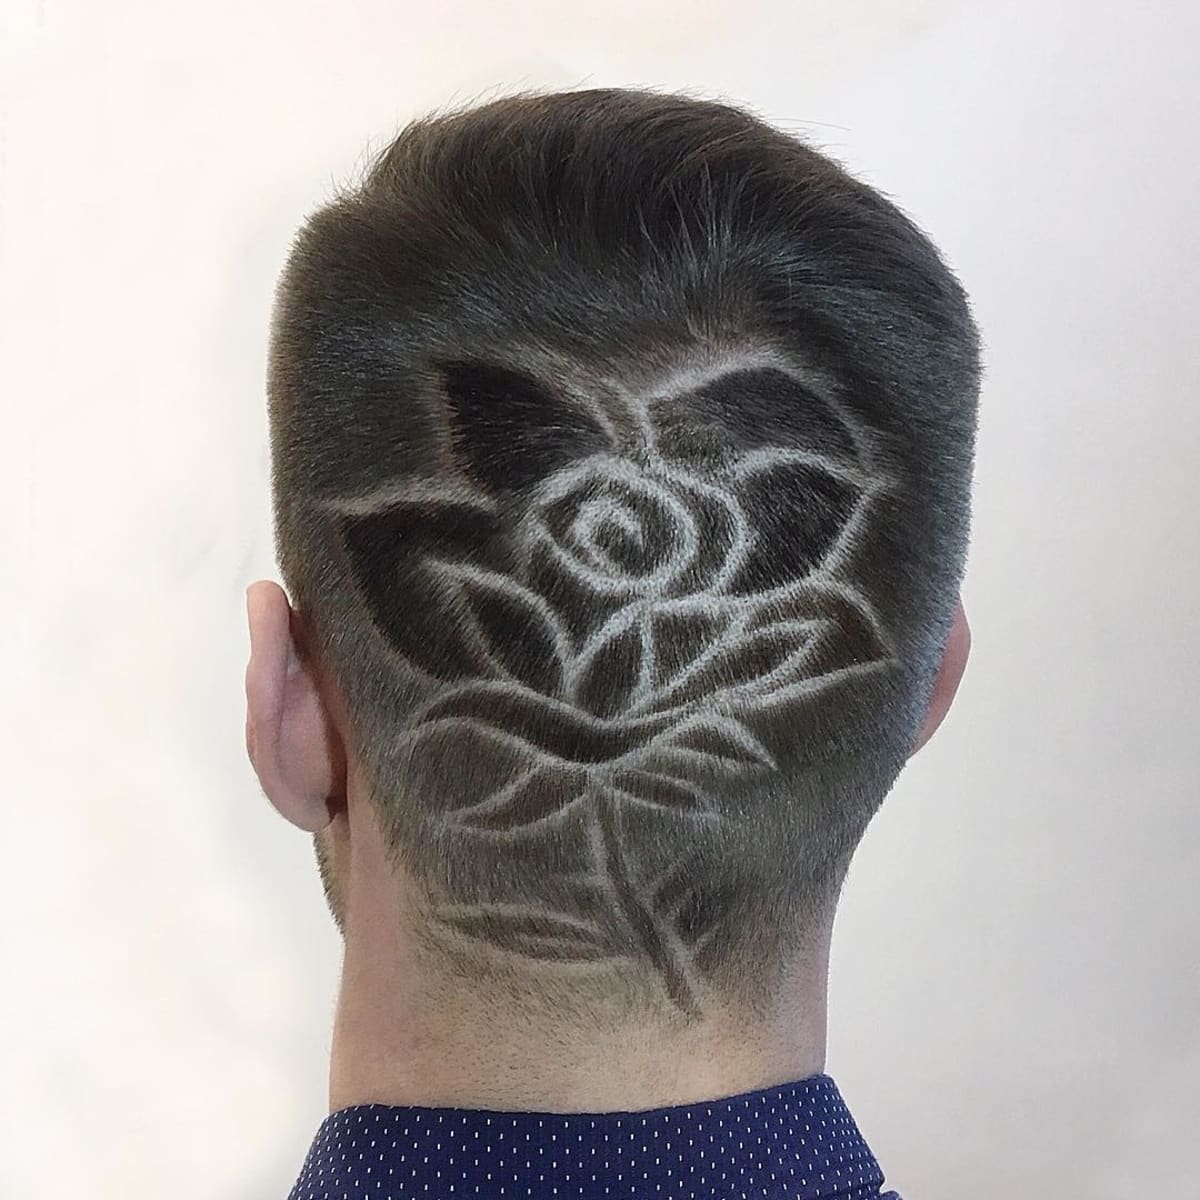 Rose hair design for males